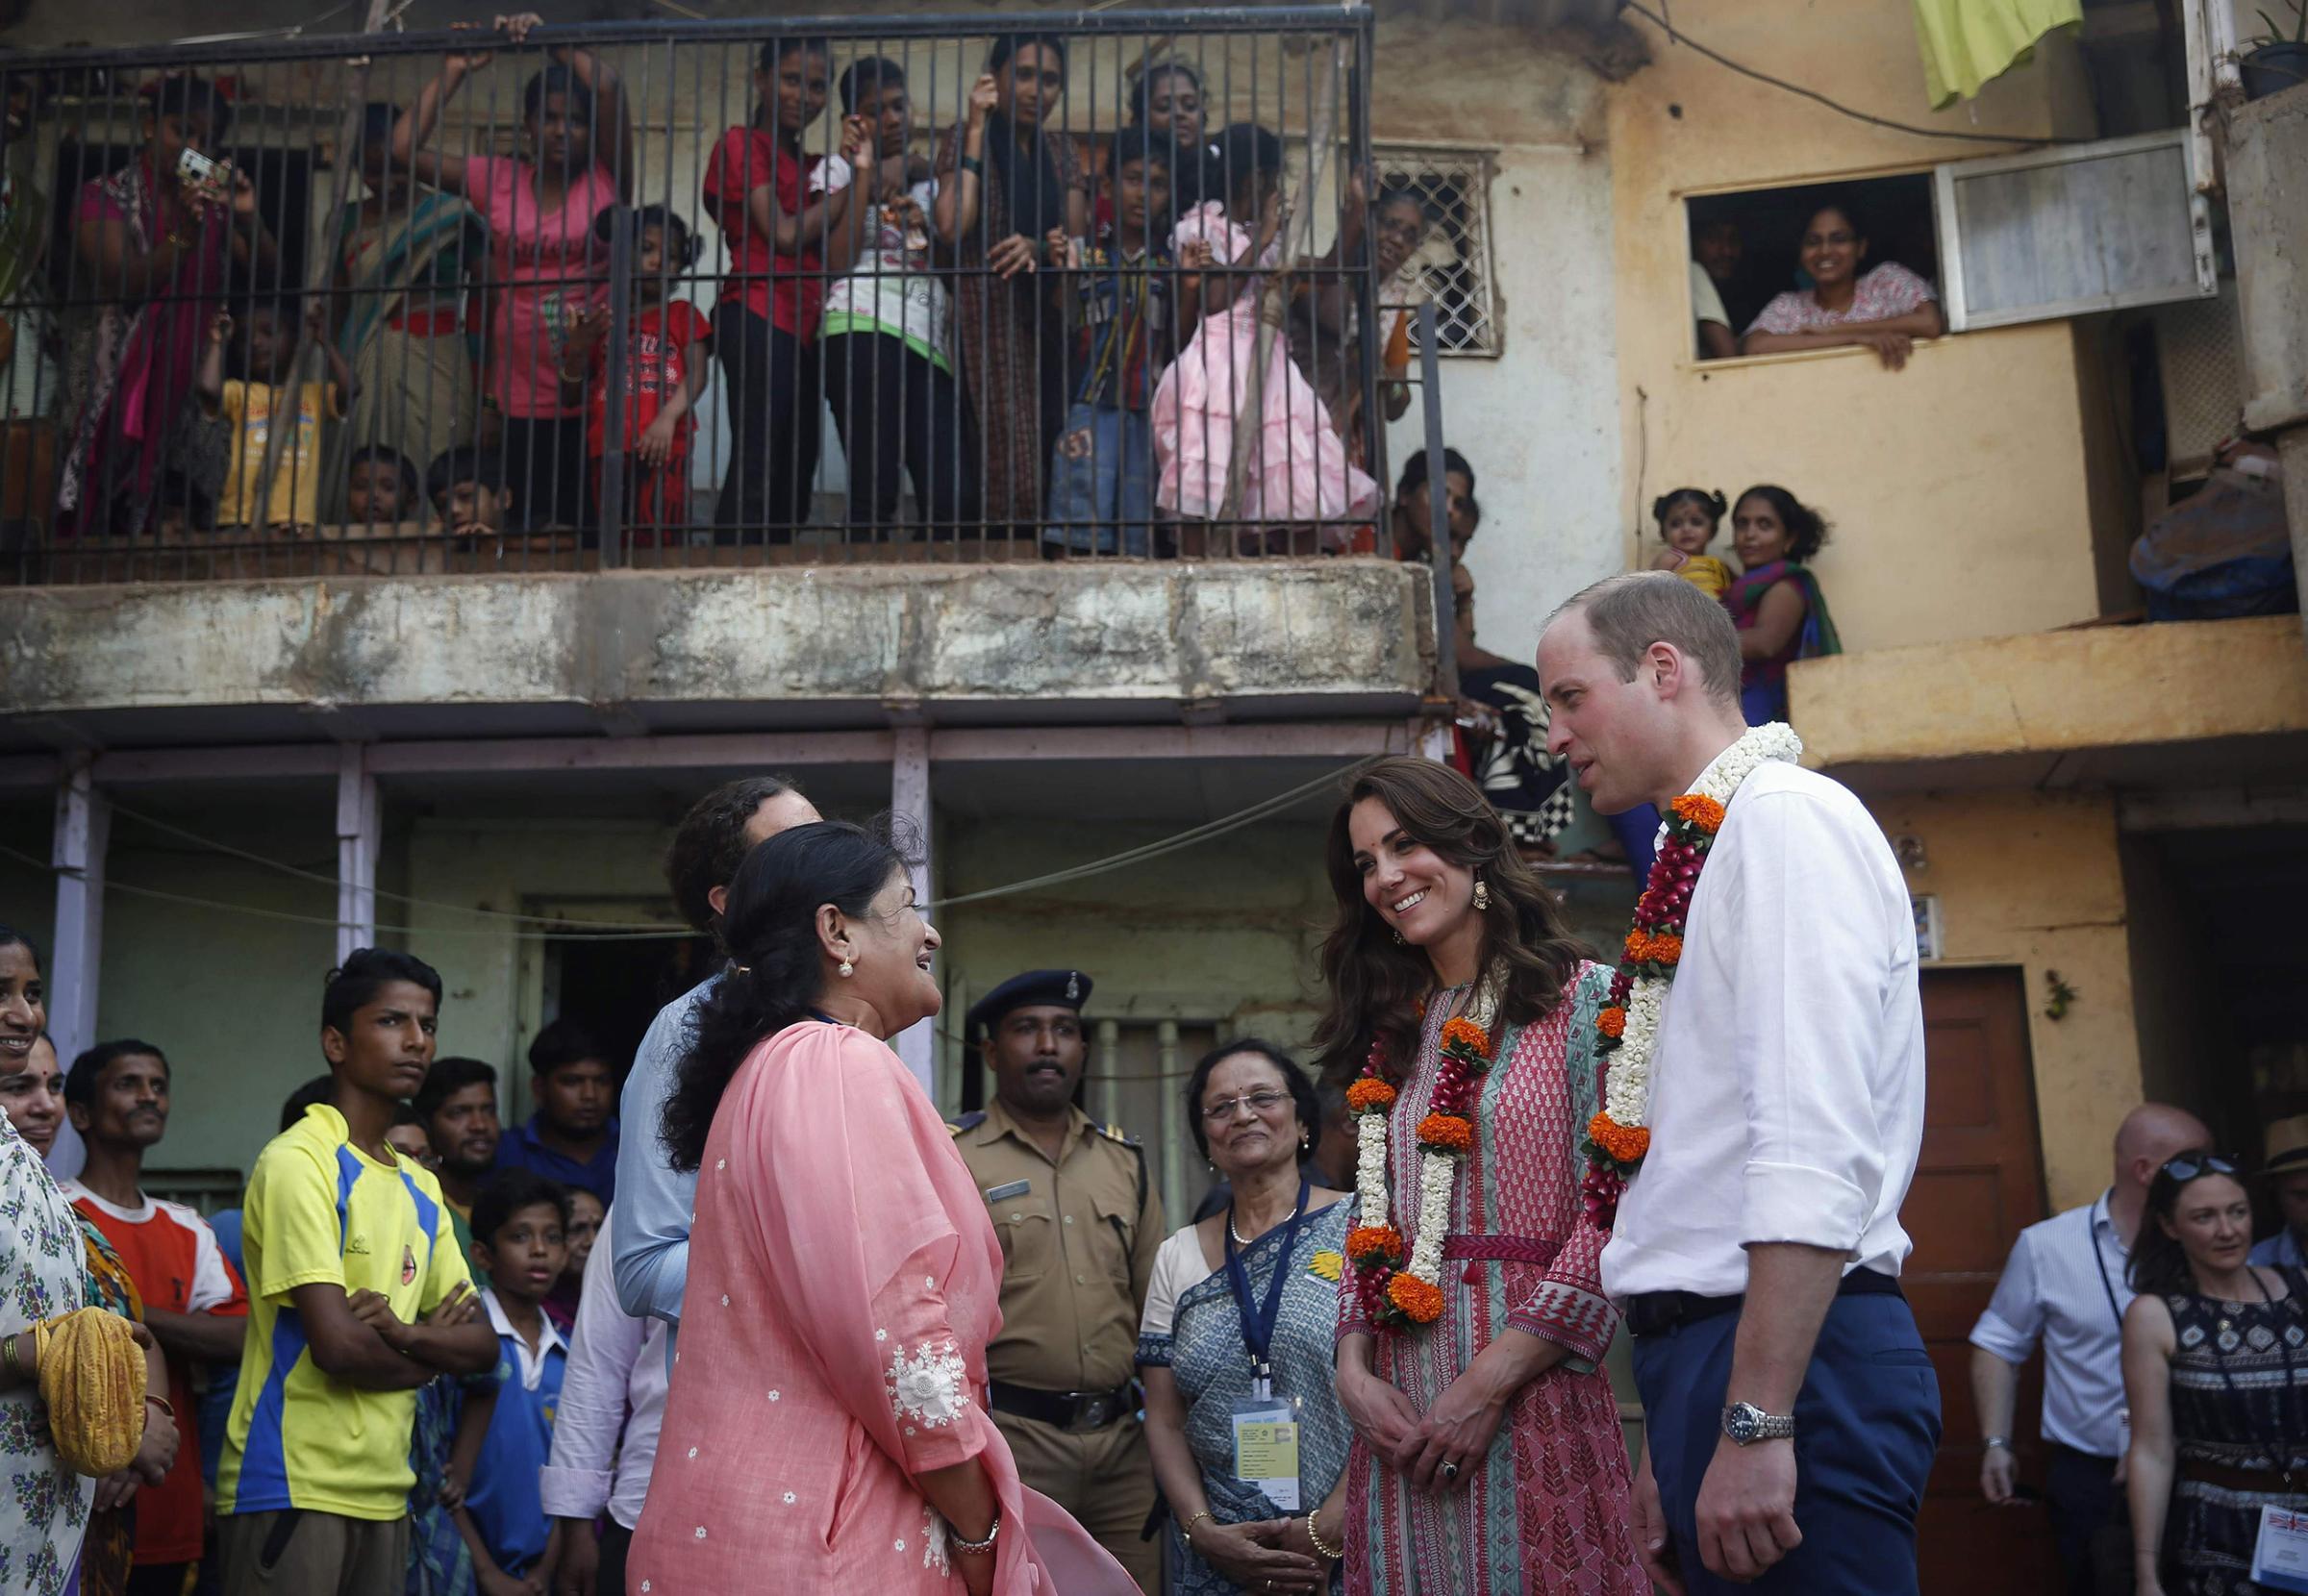 Prince William and Catherine, the Duchess of Cambridge, visit a slum area of Mumbai on April 10, 2016.